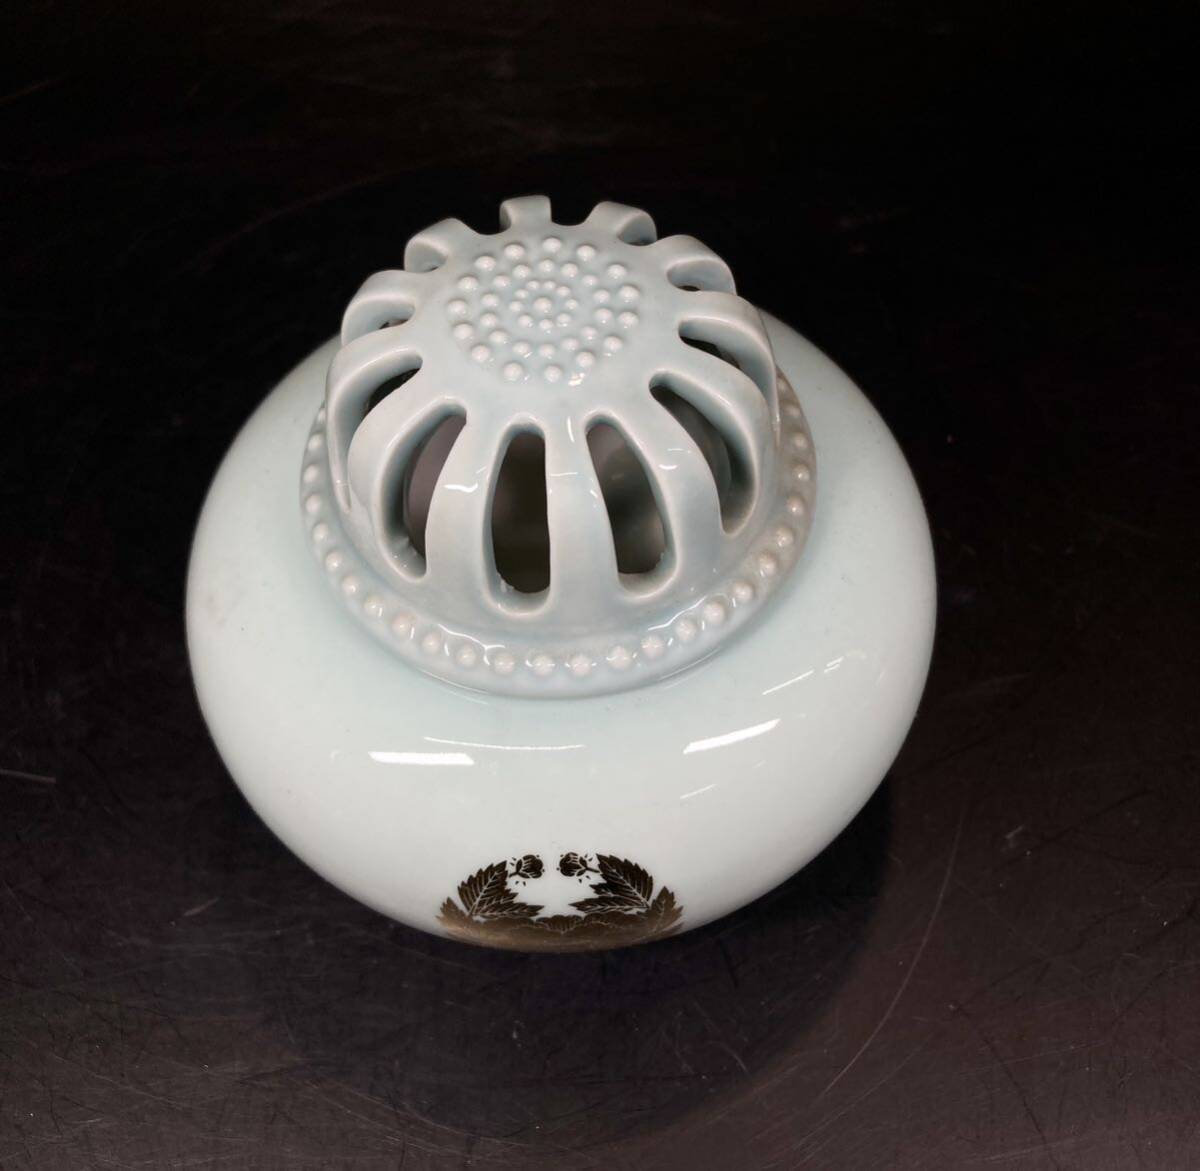  celadon circle censer three pair censer . type ceramics and porcelain tea utensils . tool fragrance ornament 